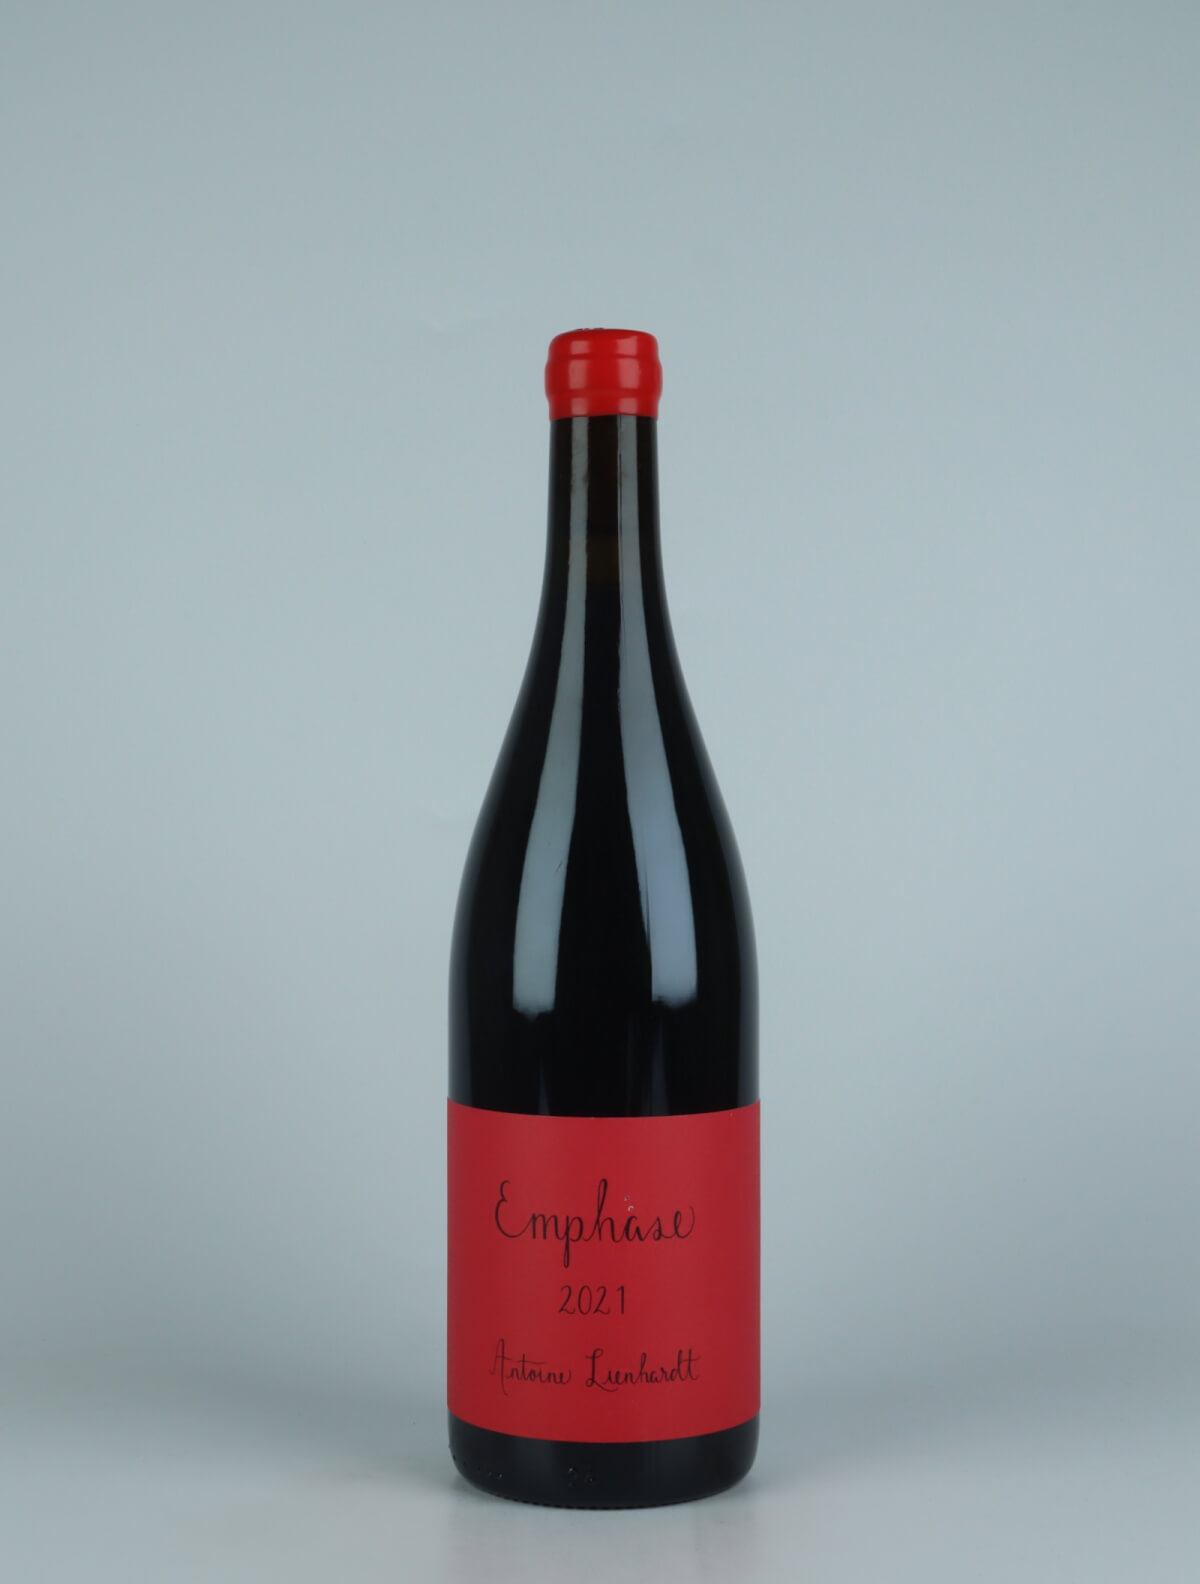 A bottle 2021 Côte de Nuits Villages - Emphase Red wine from Antoine Lienhardt, Burgundy in France